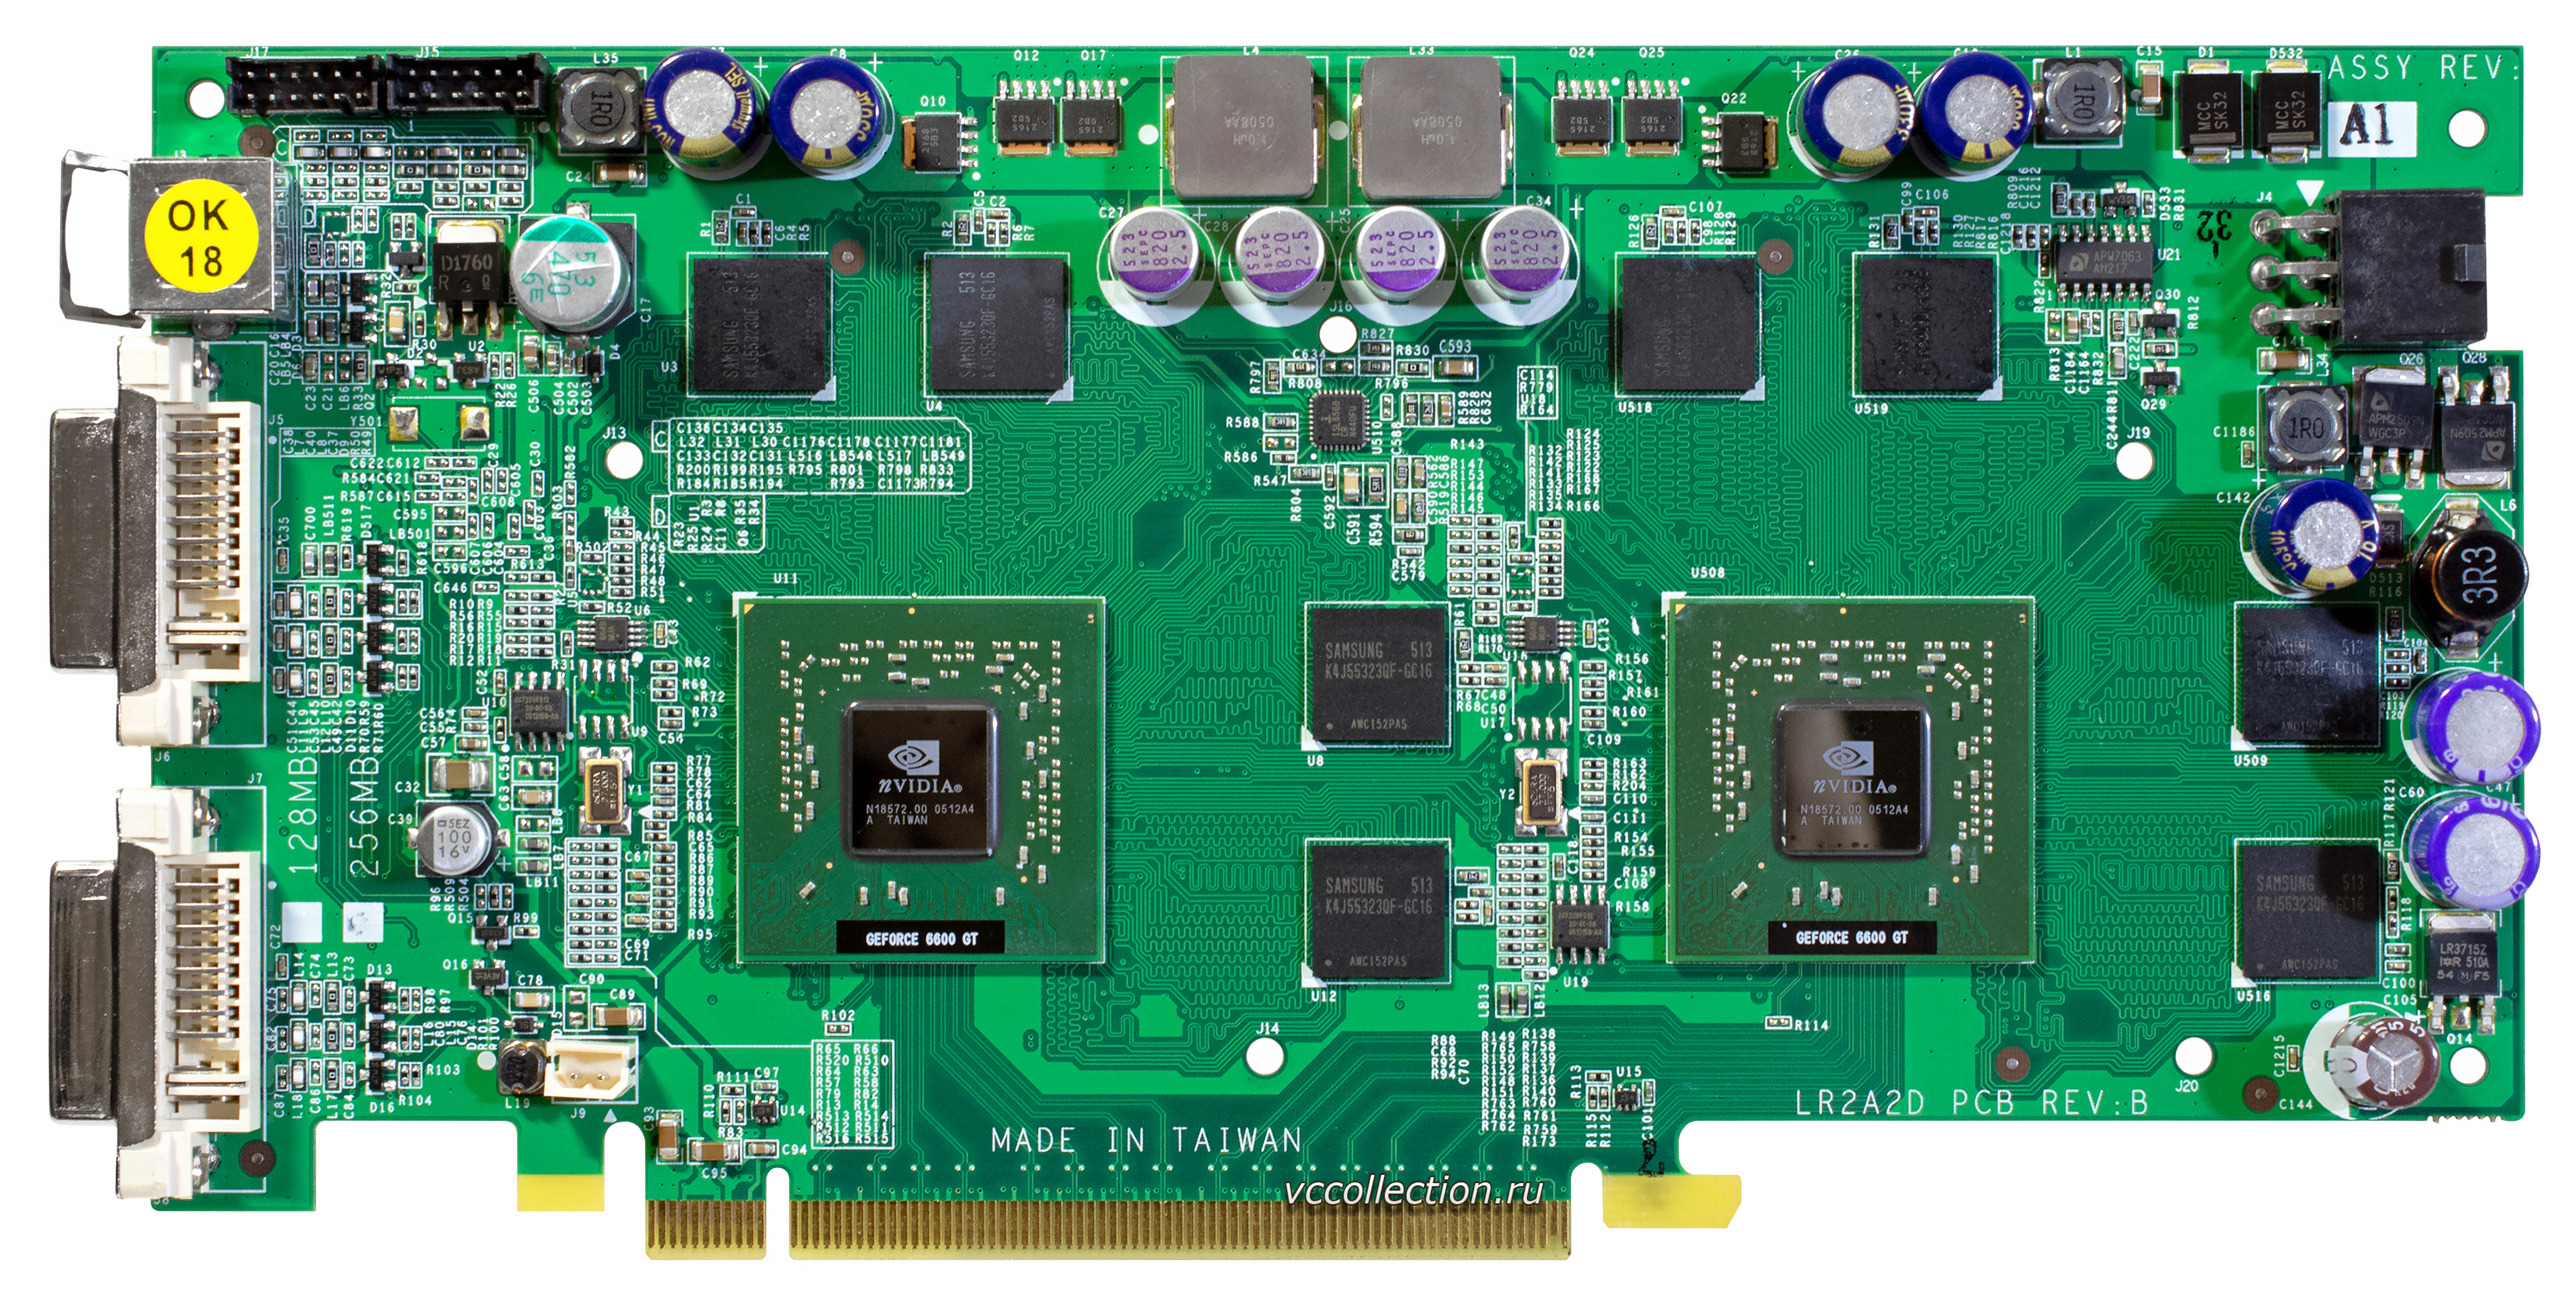 NVidia GeForce 6600 GT x2